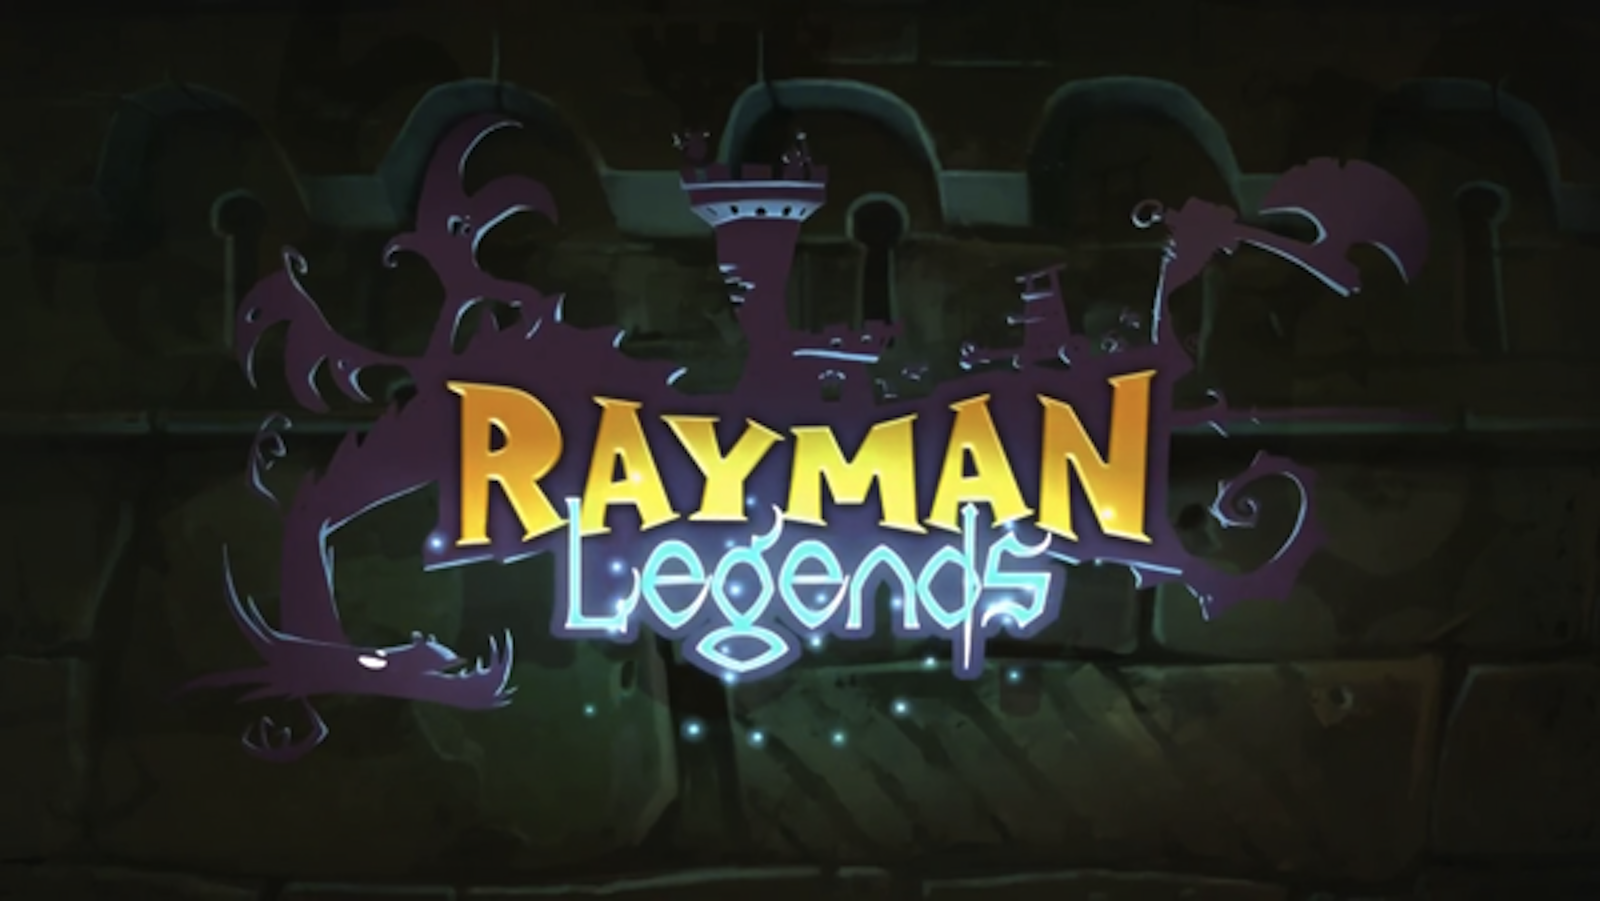 Rayman Origins Pc Download Crack